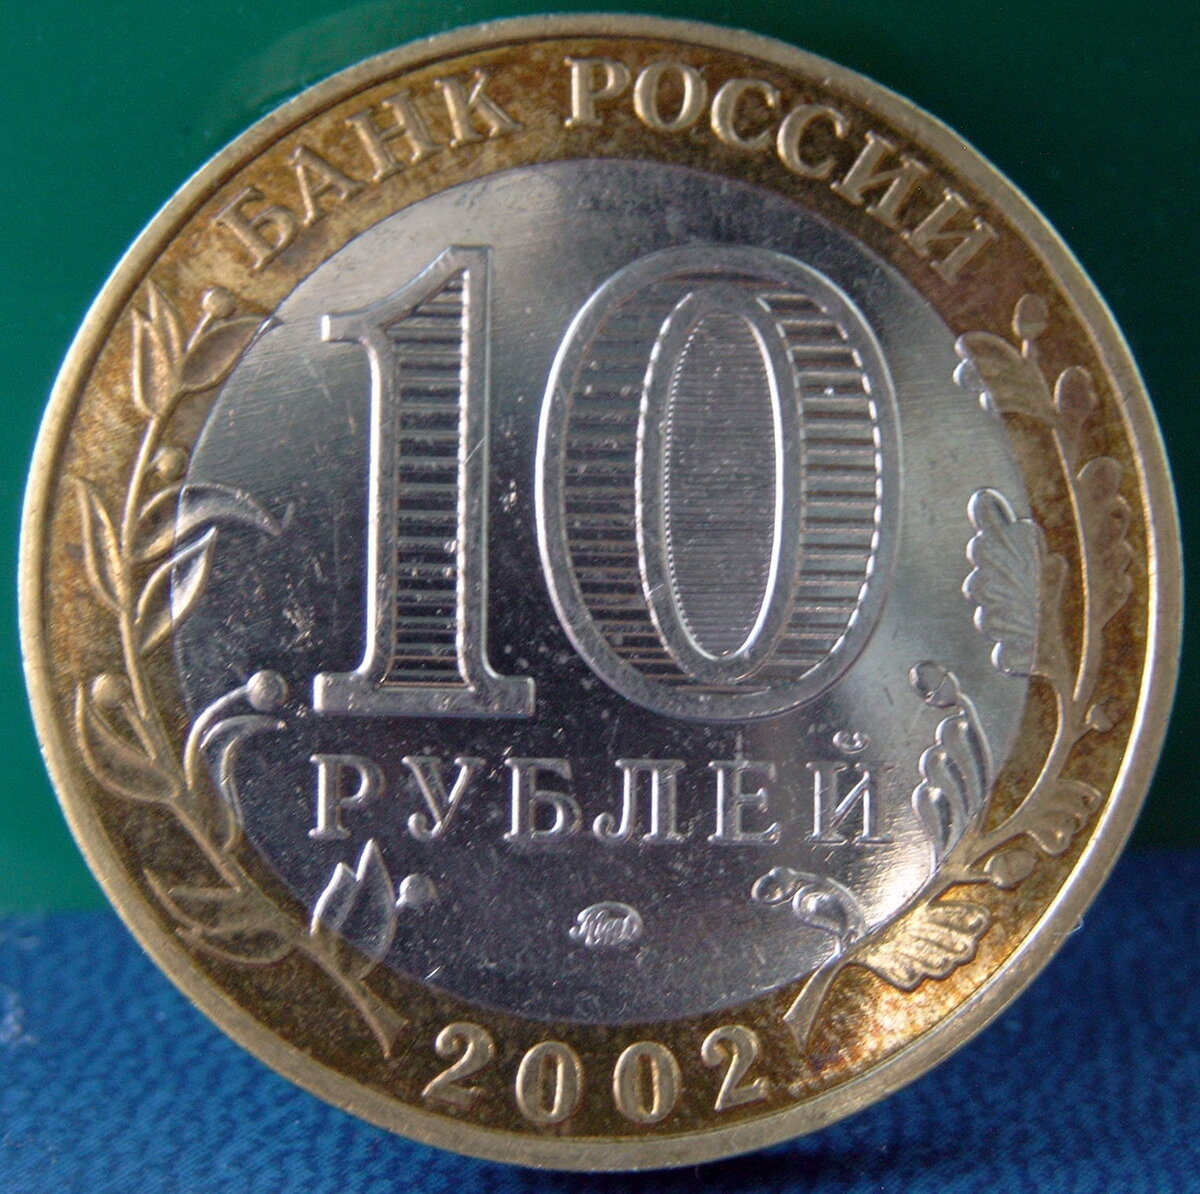 Steam рубли по 10 рублей фото 60